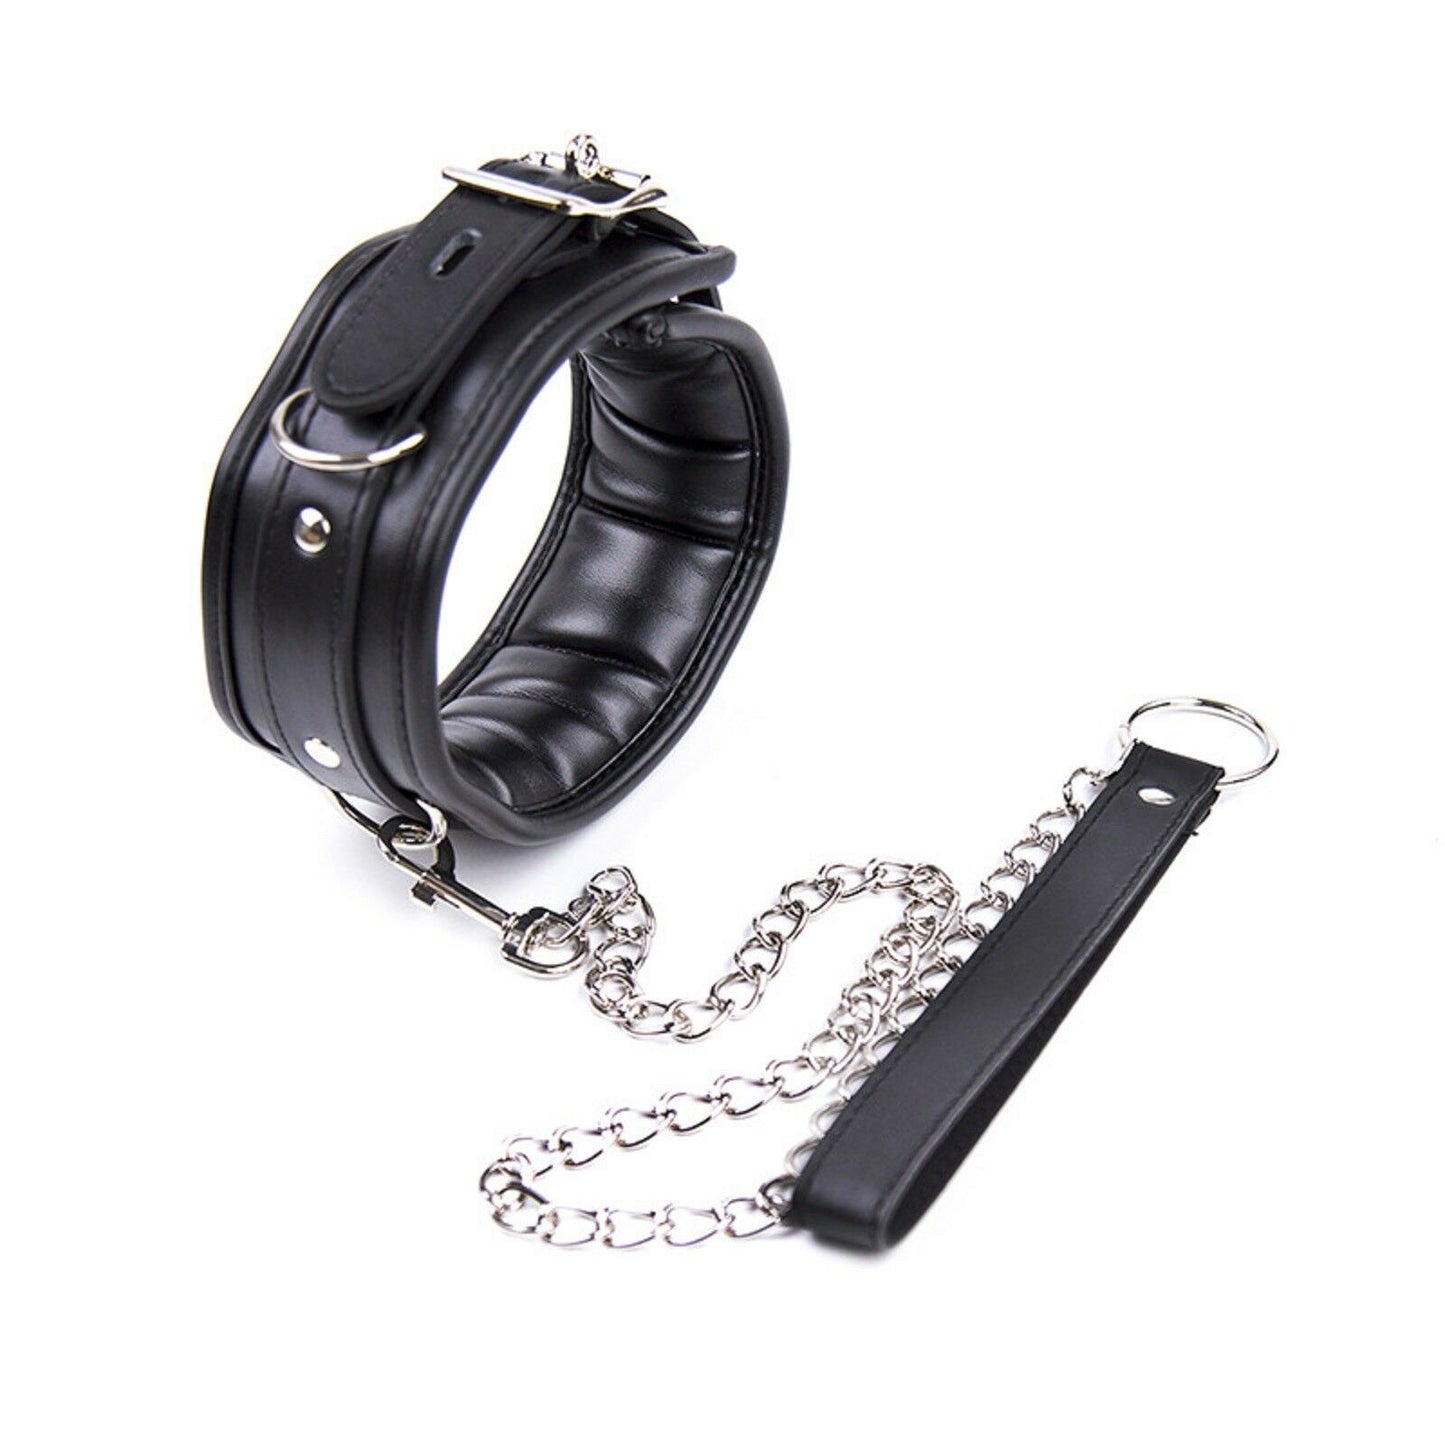 BDSM PU Leather Bondage Collar Leash Metal Chain Restraint Couple Adult/Sex Toy